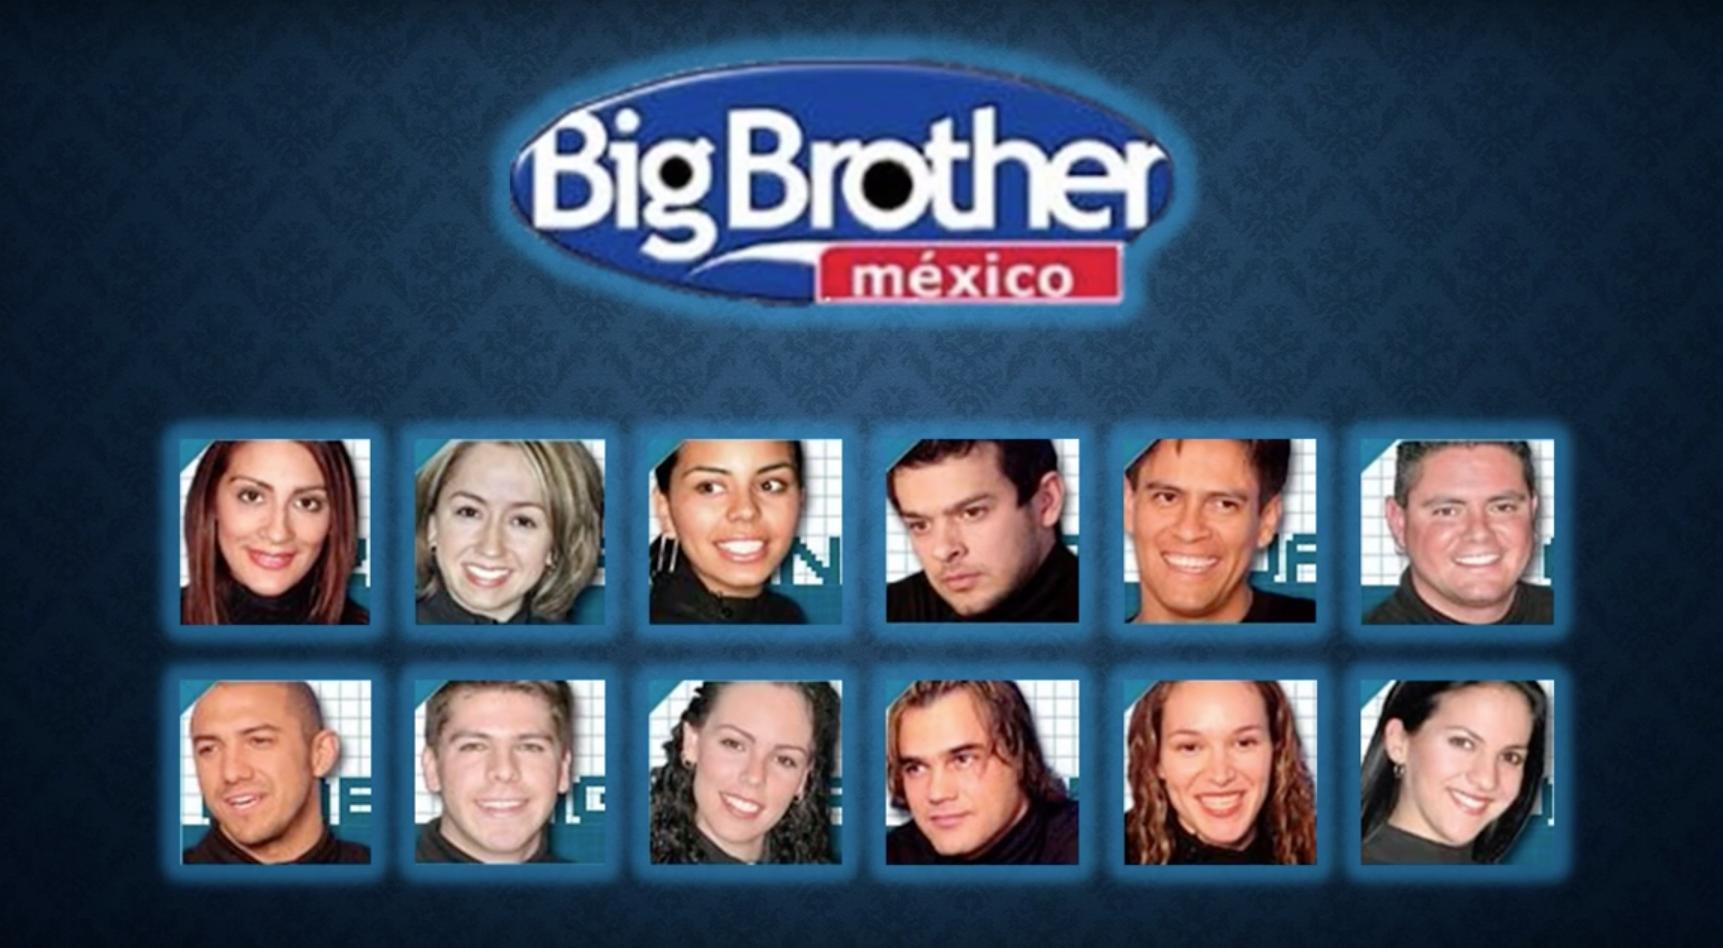 Big Brother Mexico 2002 short movie